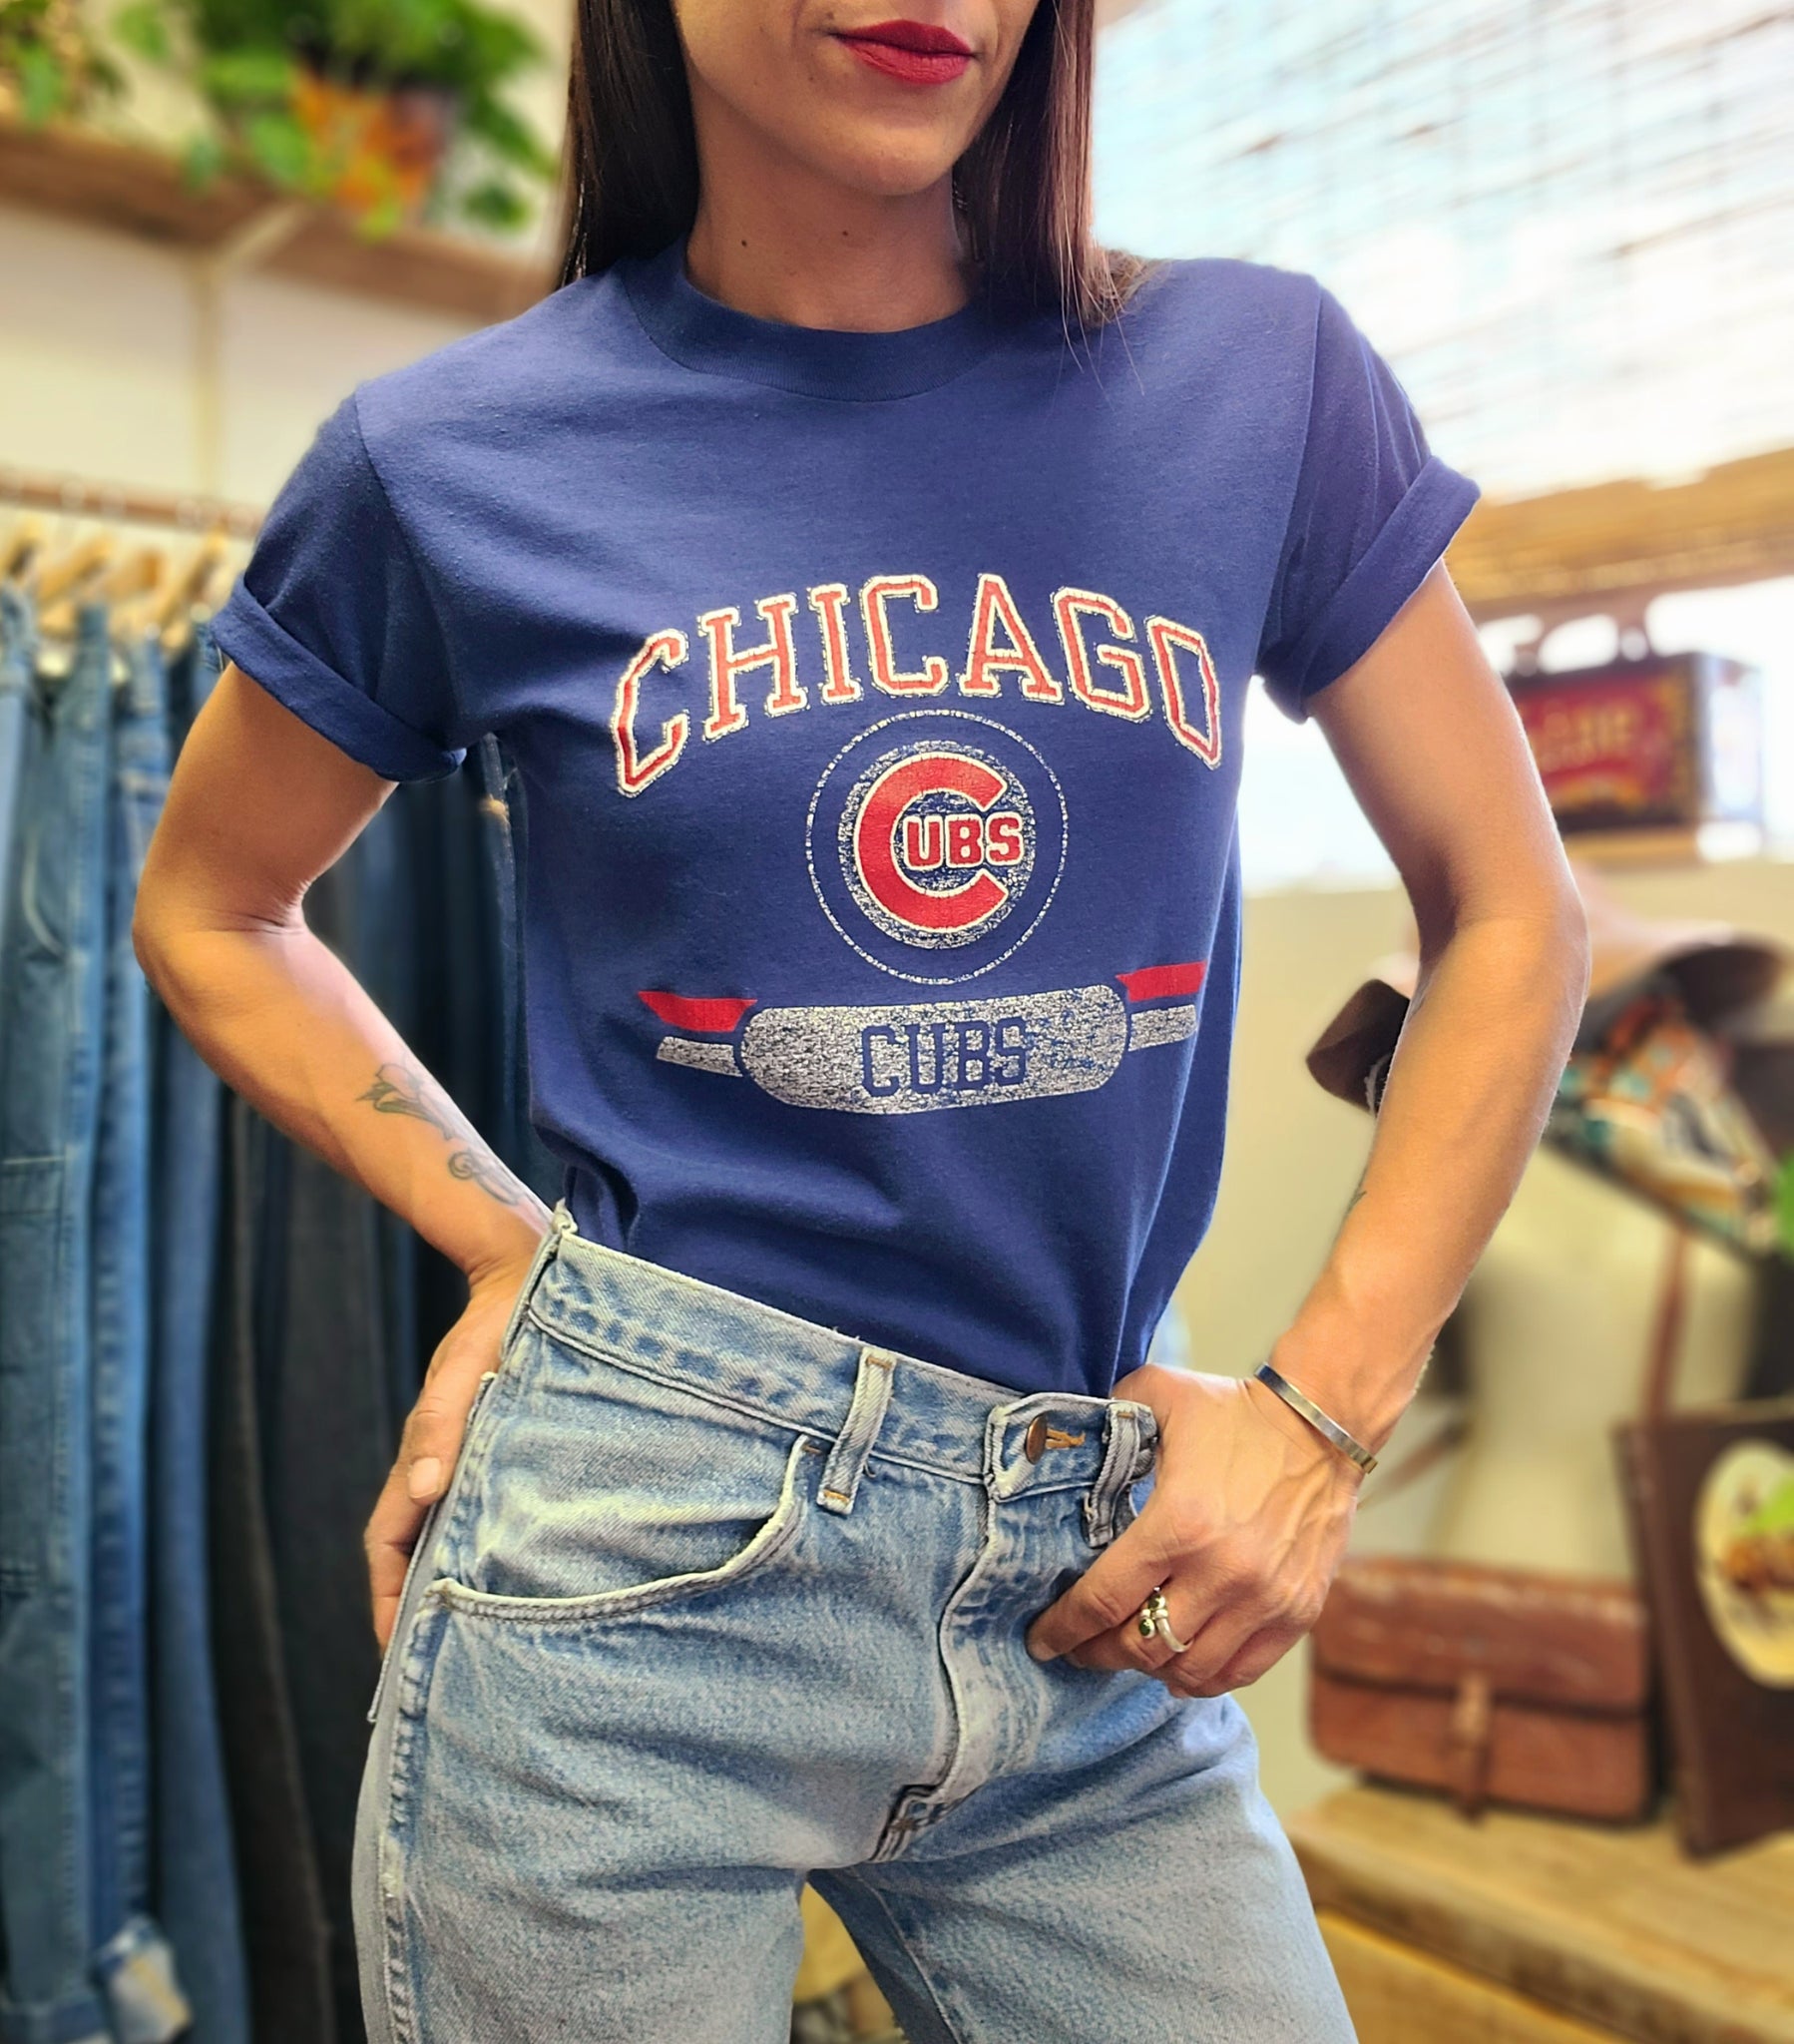 Chicago Cubs Vintage Champion tee – L'antico Vintage Co.